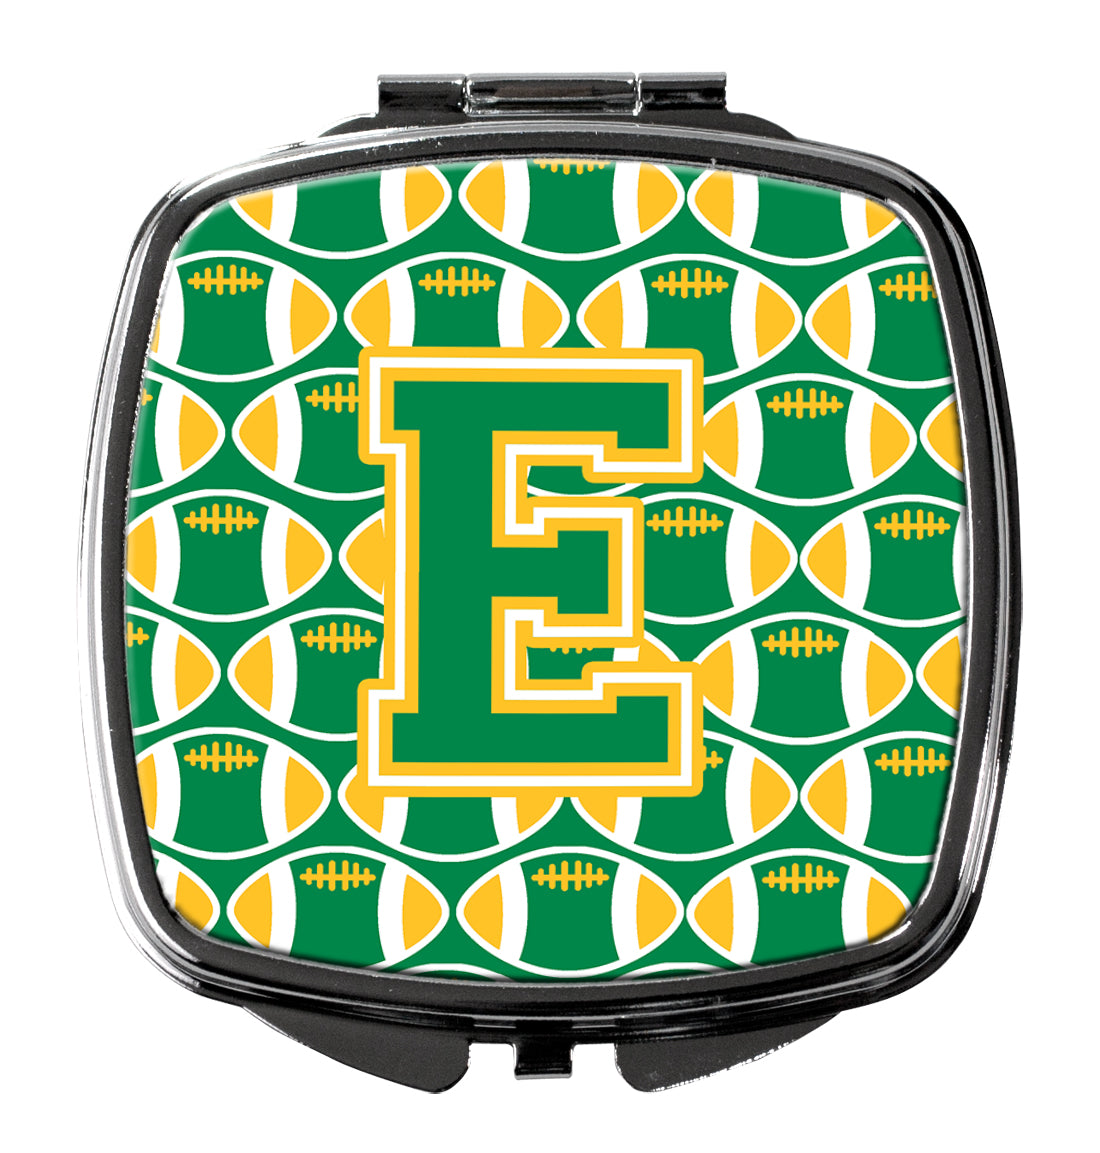 Lettre E Football Vert et Or Compact Miroir CJ1069-ESCM